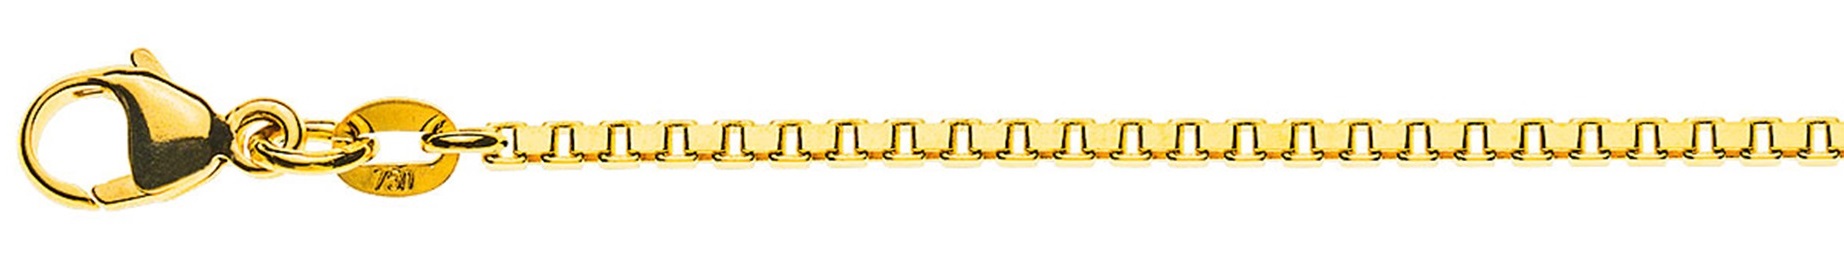 AURONOS Prestige Necklace yellow gold 18K Venetian chain diamond 50cm 1.6mm